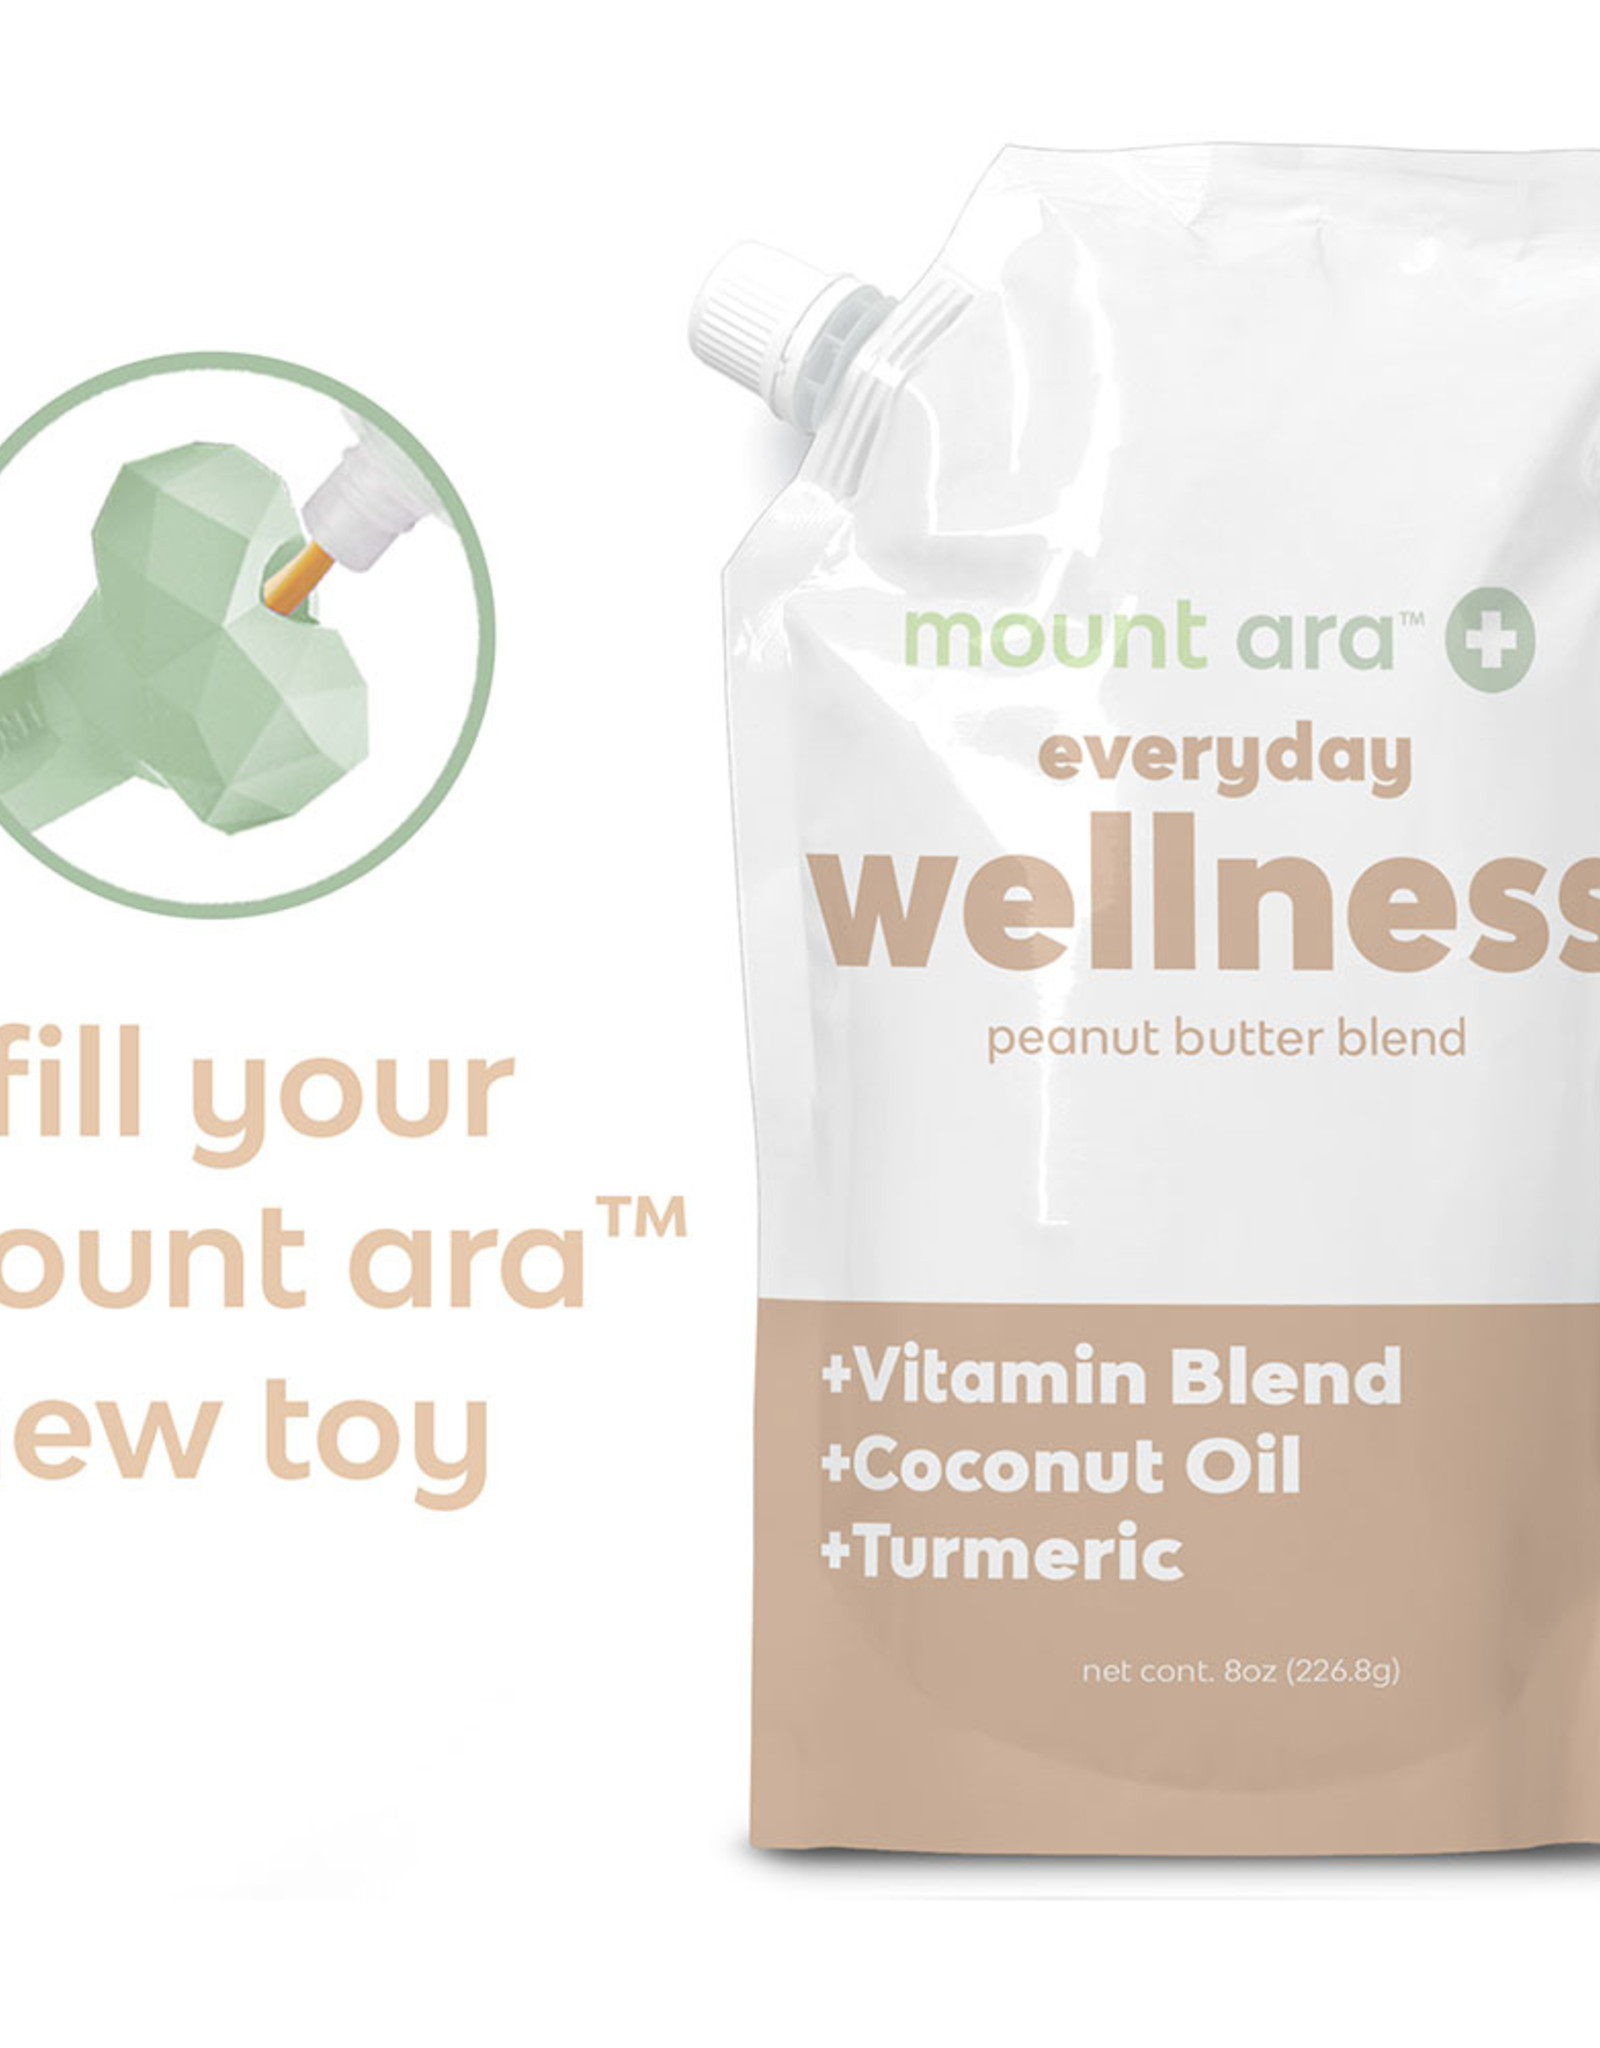 Mount Ara mount ara™ + Everyday Wellness Spread